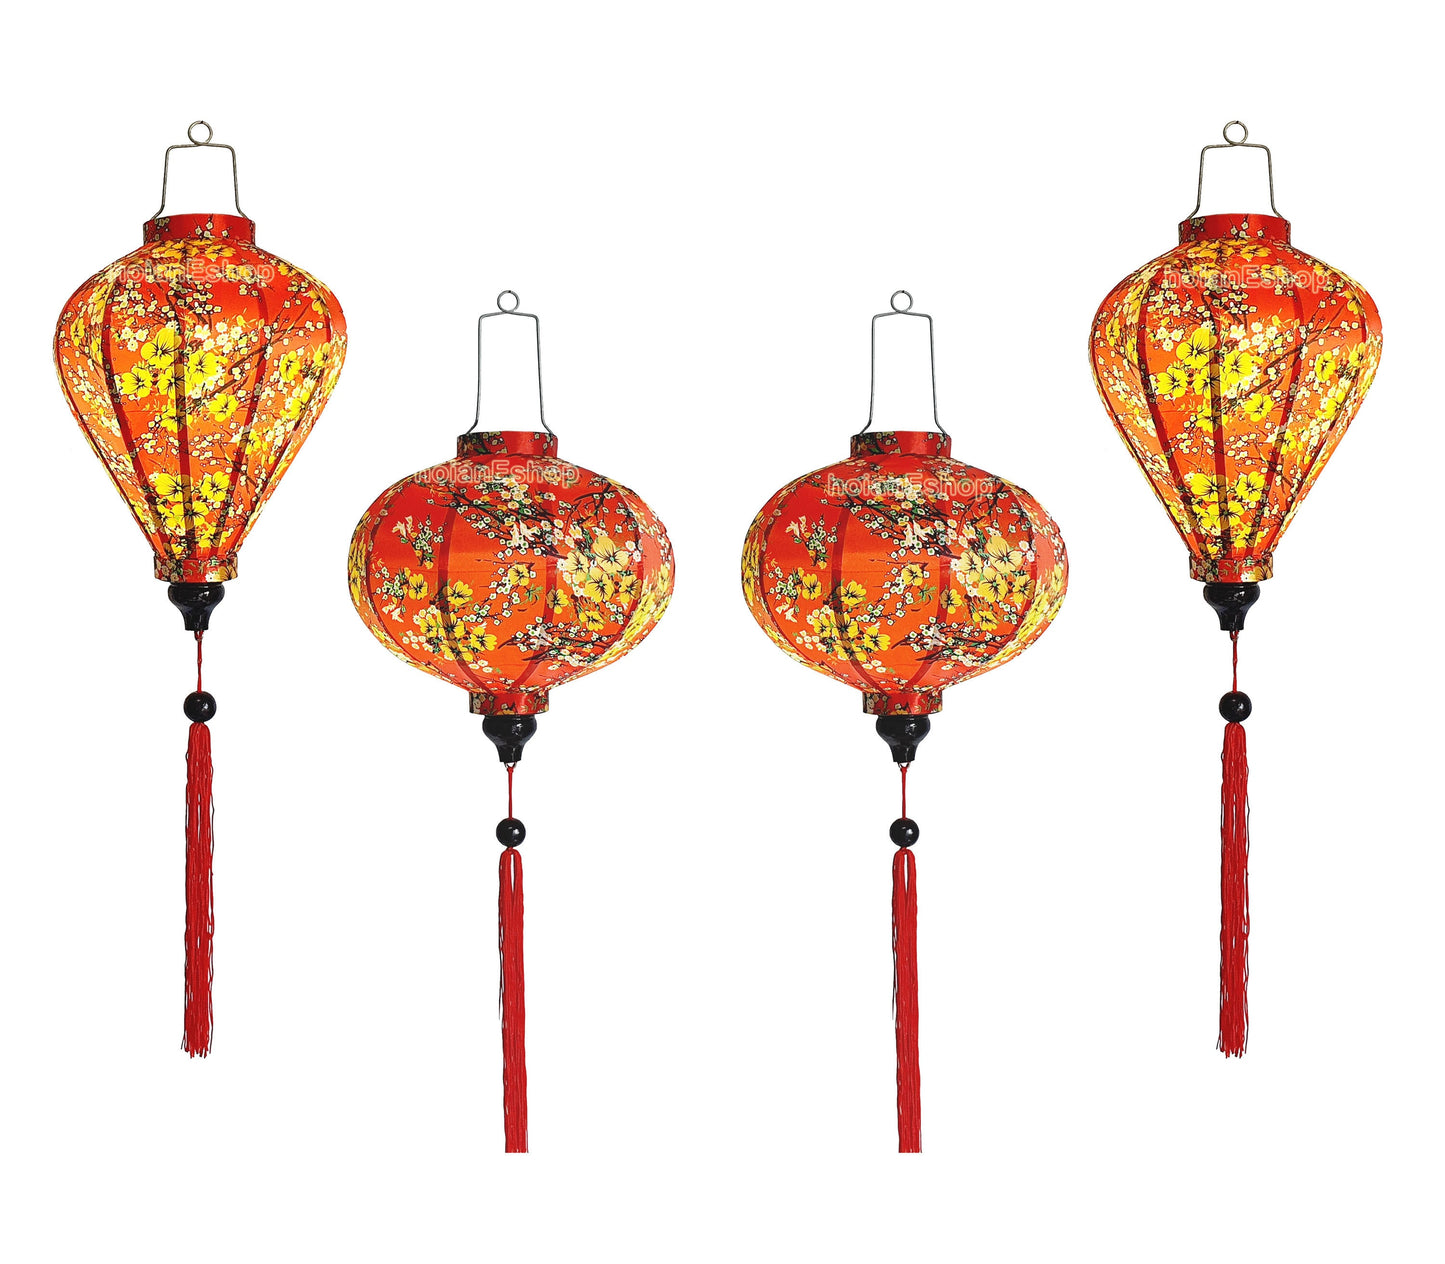 Vietnamese lanterns 35cm - Waterproof lanterns - Customized order - Wedding decoration - Garden decoration - Lantern outdoor - Set 4 pcs